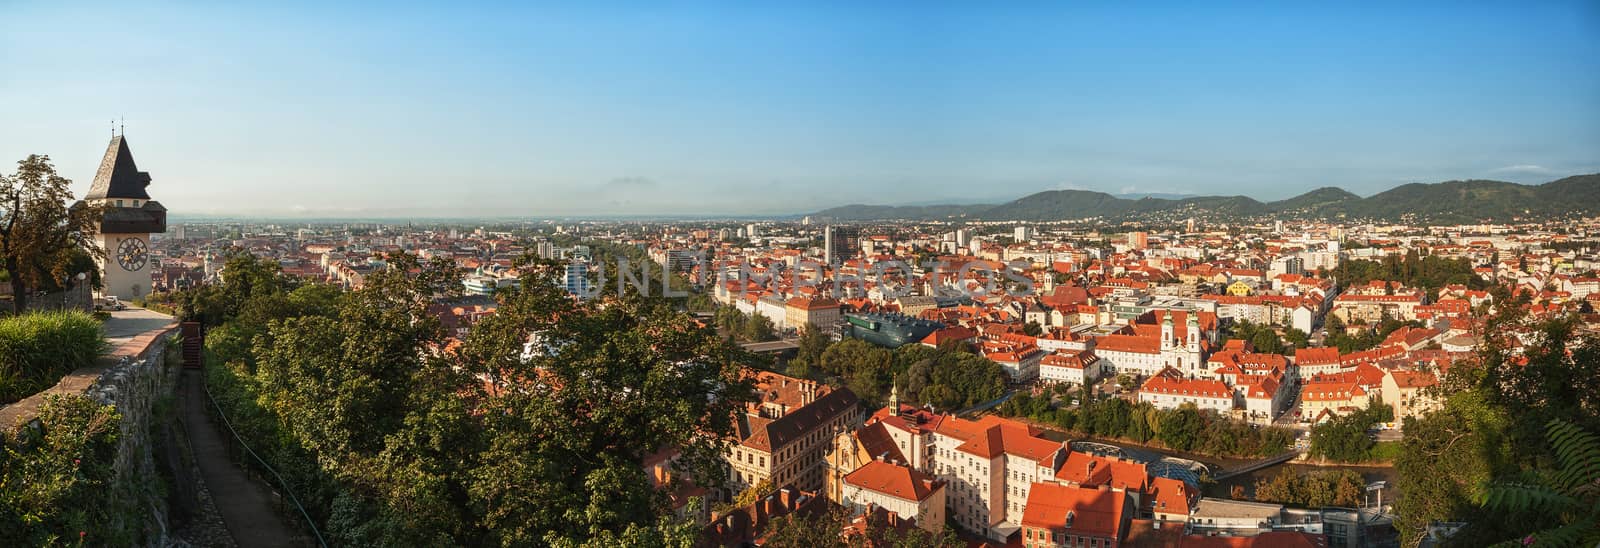 Panorama of Graz by mot1963